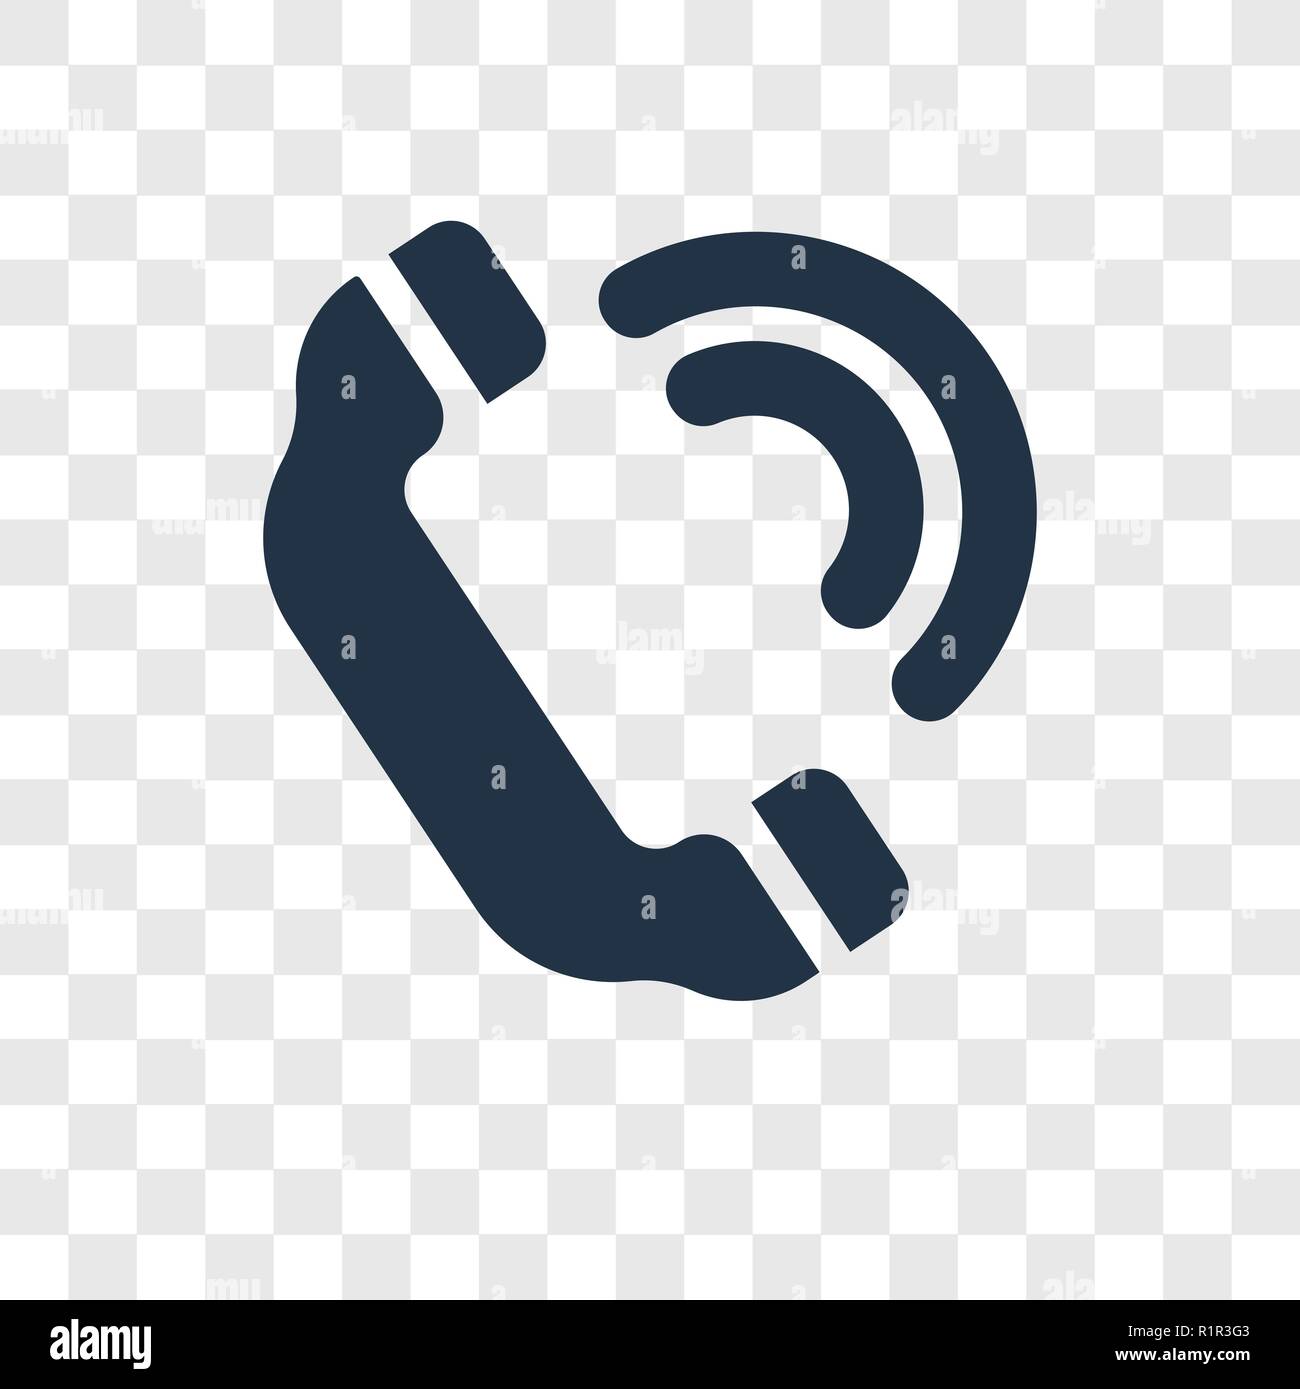 Free Blue Phone SVG, PNG Icon, Symbol. Download Image.